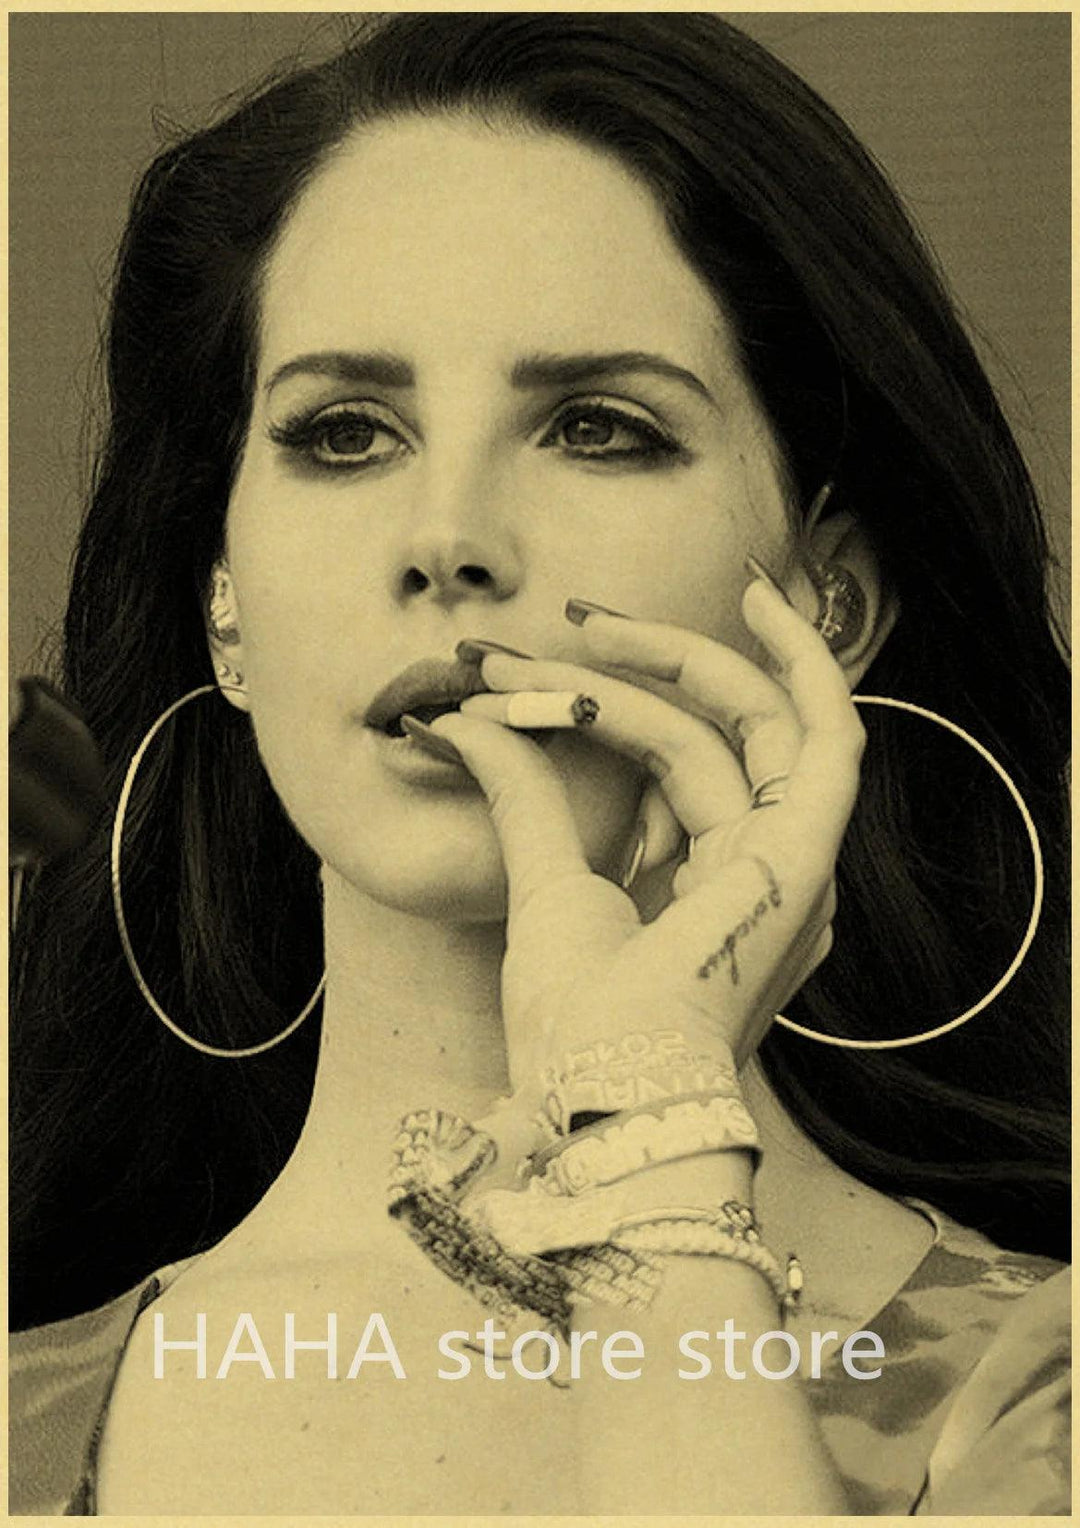 Lana Del Rey Music Posters - Retro Wall Art Prints - Home Decor - Brand My Case